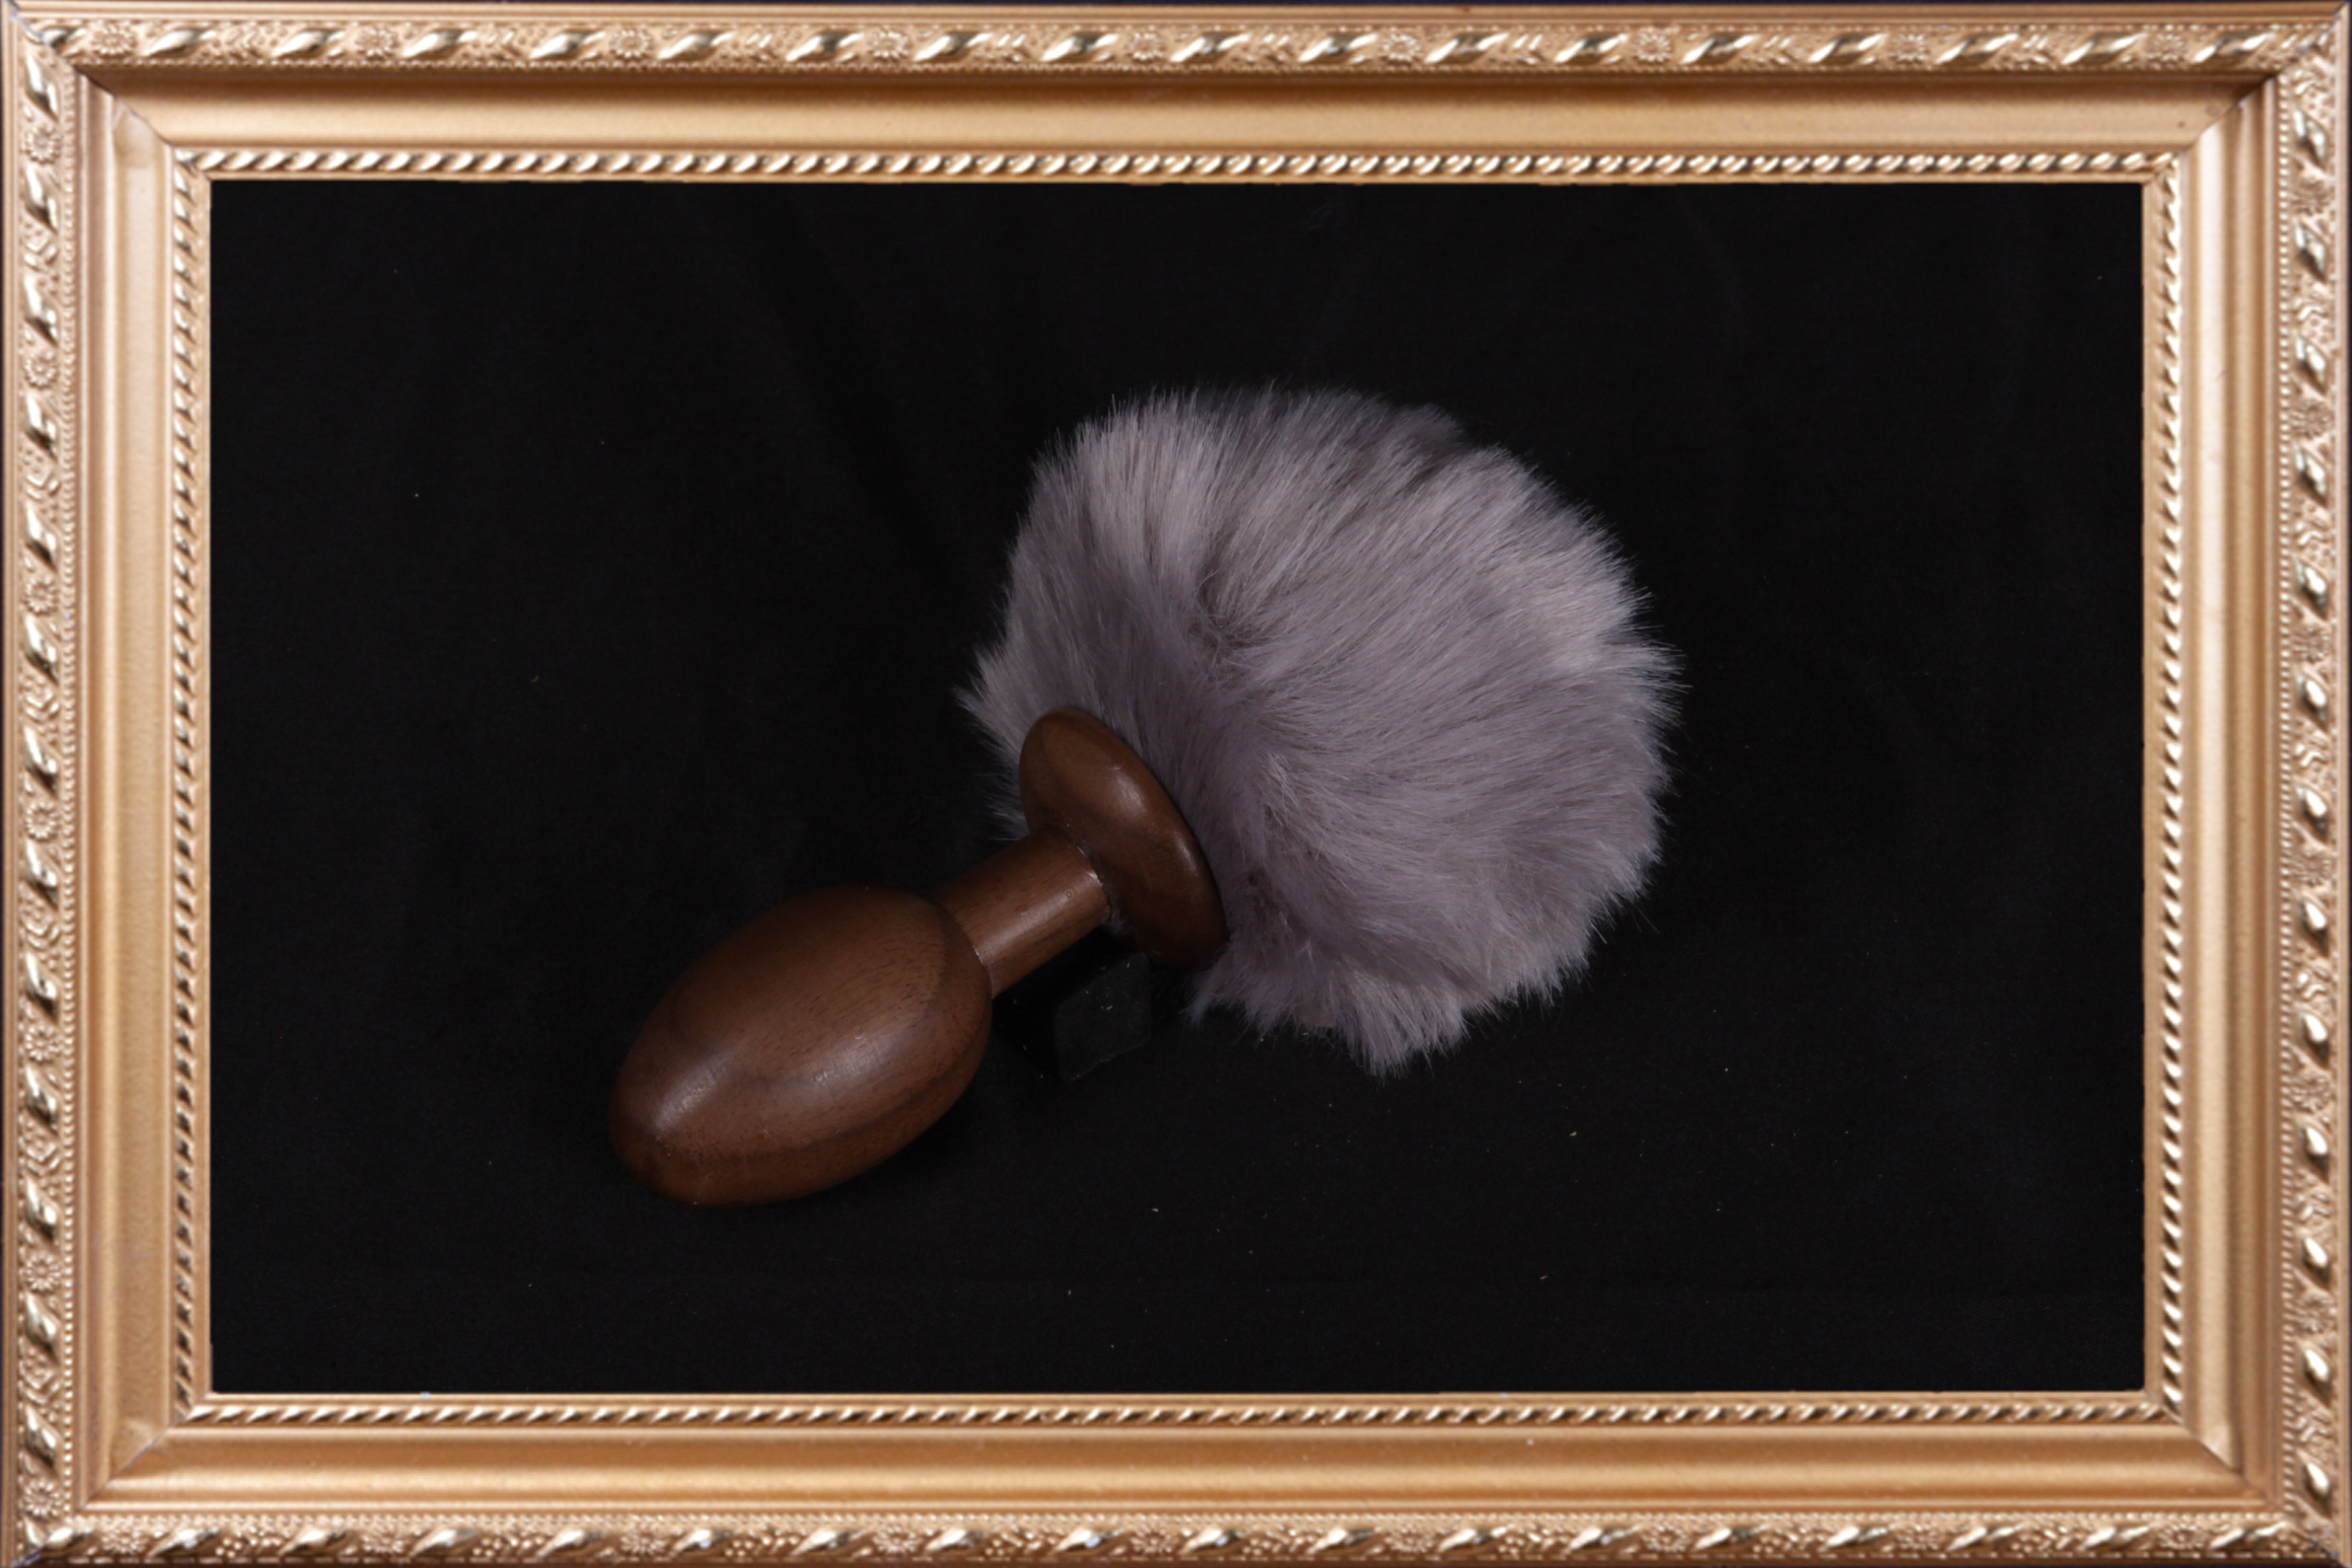 OACHKATZLSCHWOAF Nuss Hase Grau || Wooden Furry Tail Anal Butt Plug Holz|| Fox Bunny Raccoon || Sex Toy || Handmade by Holz-Knecht.at